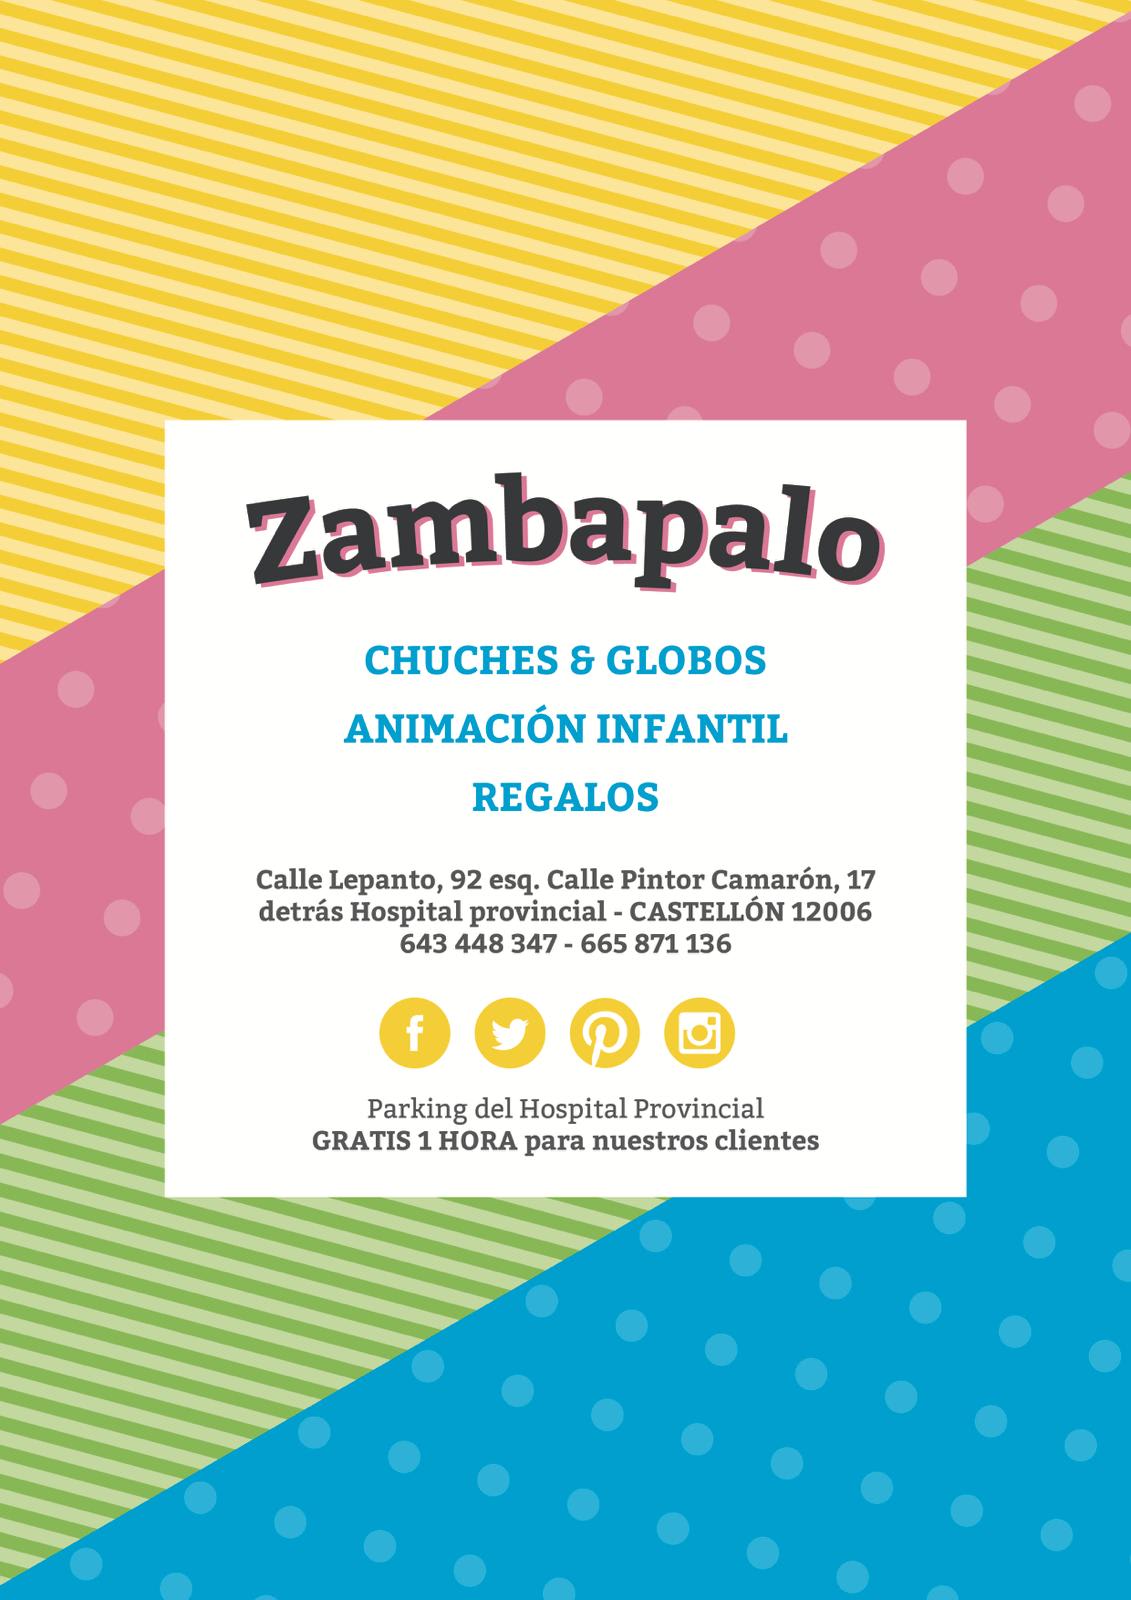 Zambapalo Chuches & Globos